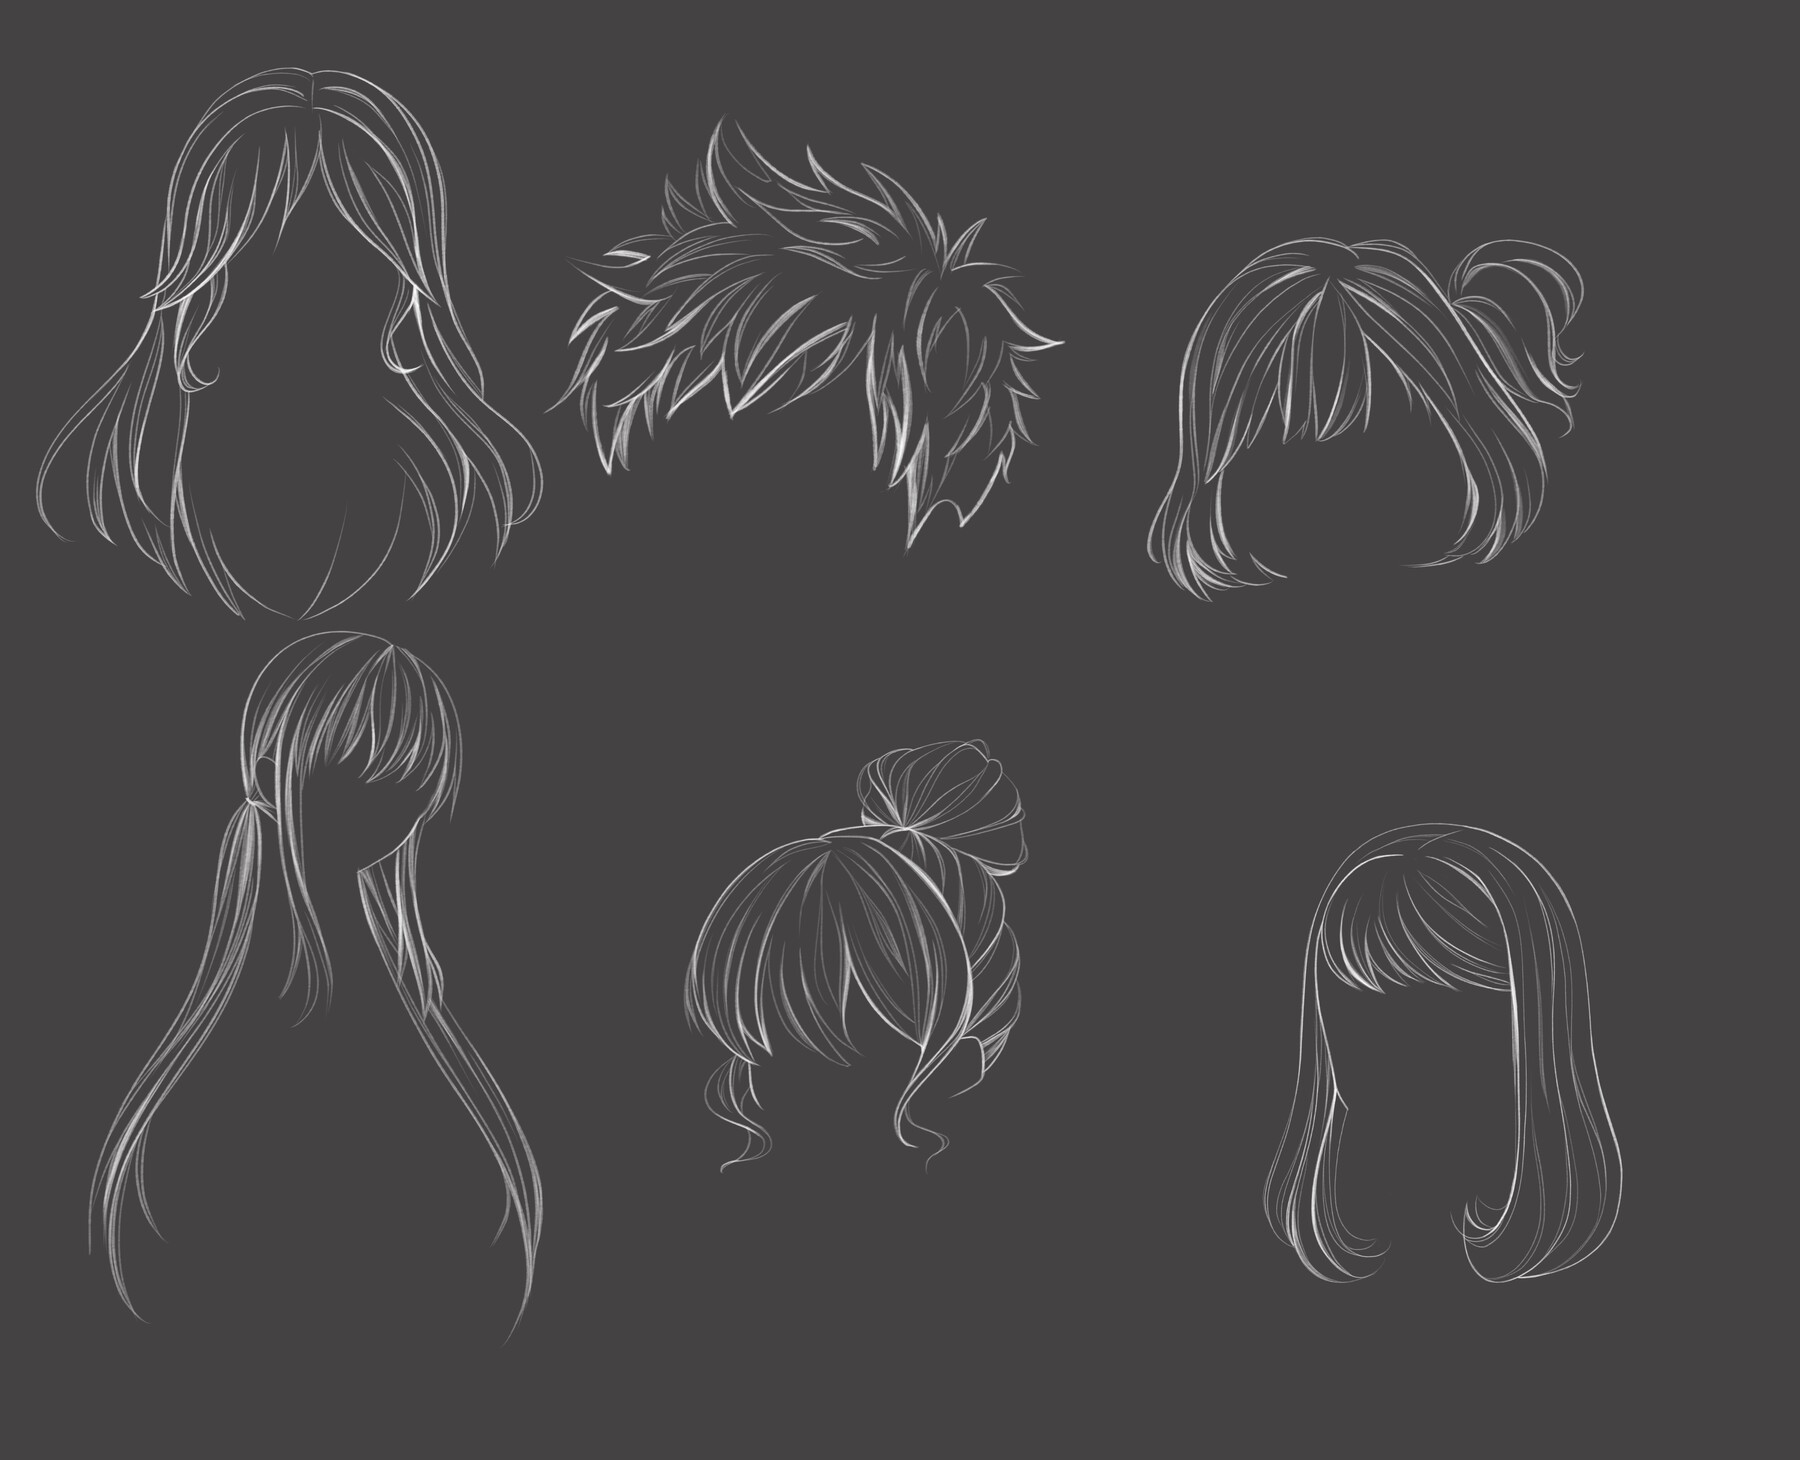 Soft Anime Style Procreate Hair Stamp Set Hair Lineart Brush Pack